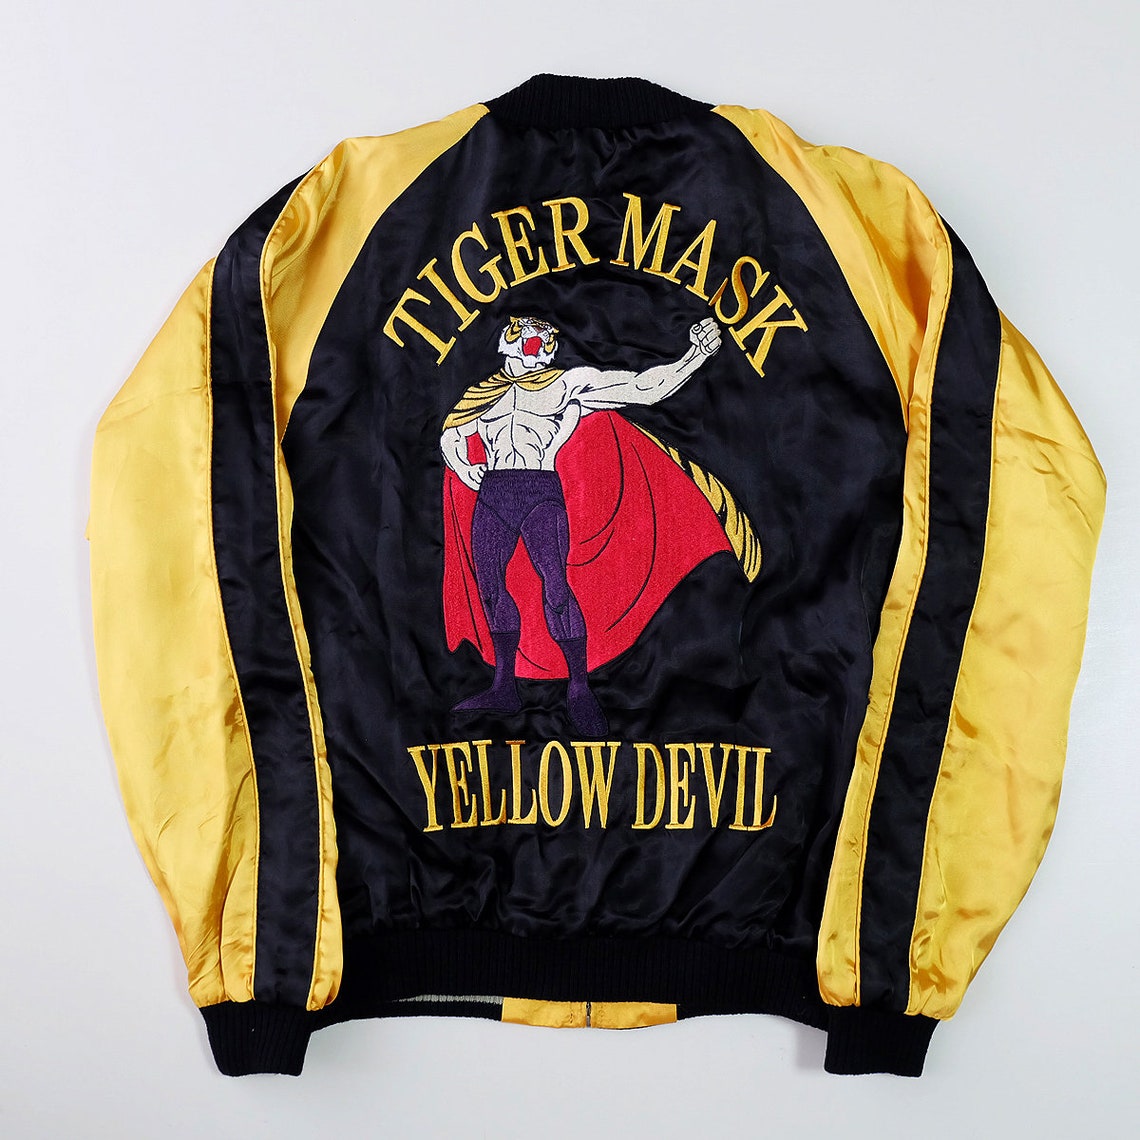 Super Rare Collectible Vintage Japanese Roaring Tiger Mask Japan Pro Wrestling Wrestler Hero Anime Character Yellow Devil Embroidered Sukajan Souvenir Jacket